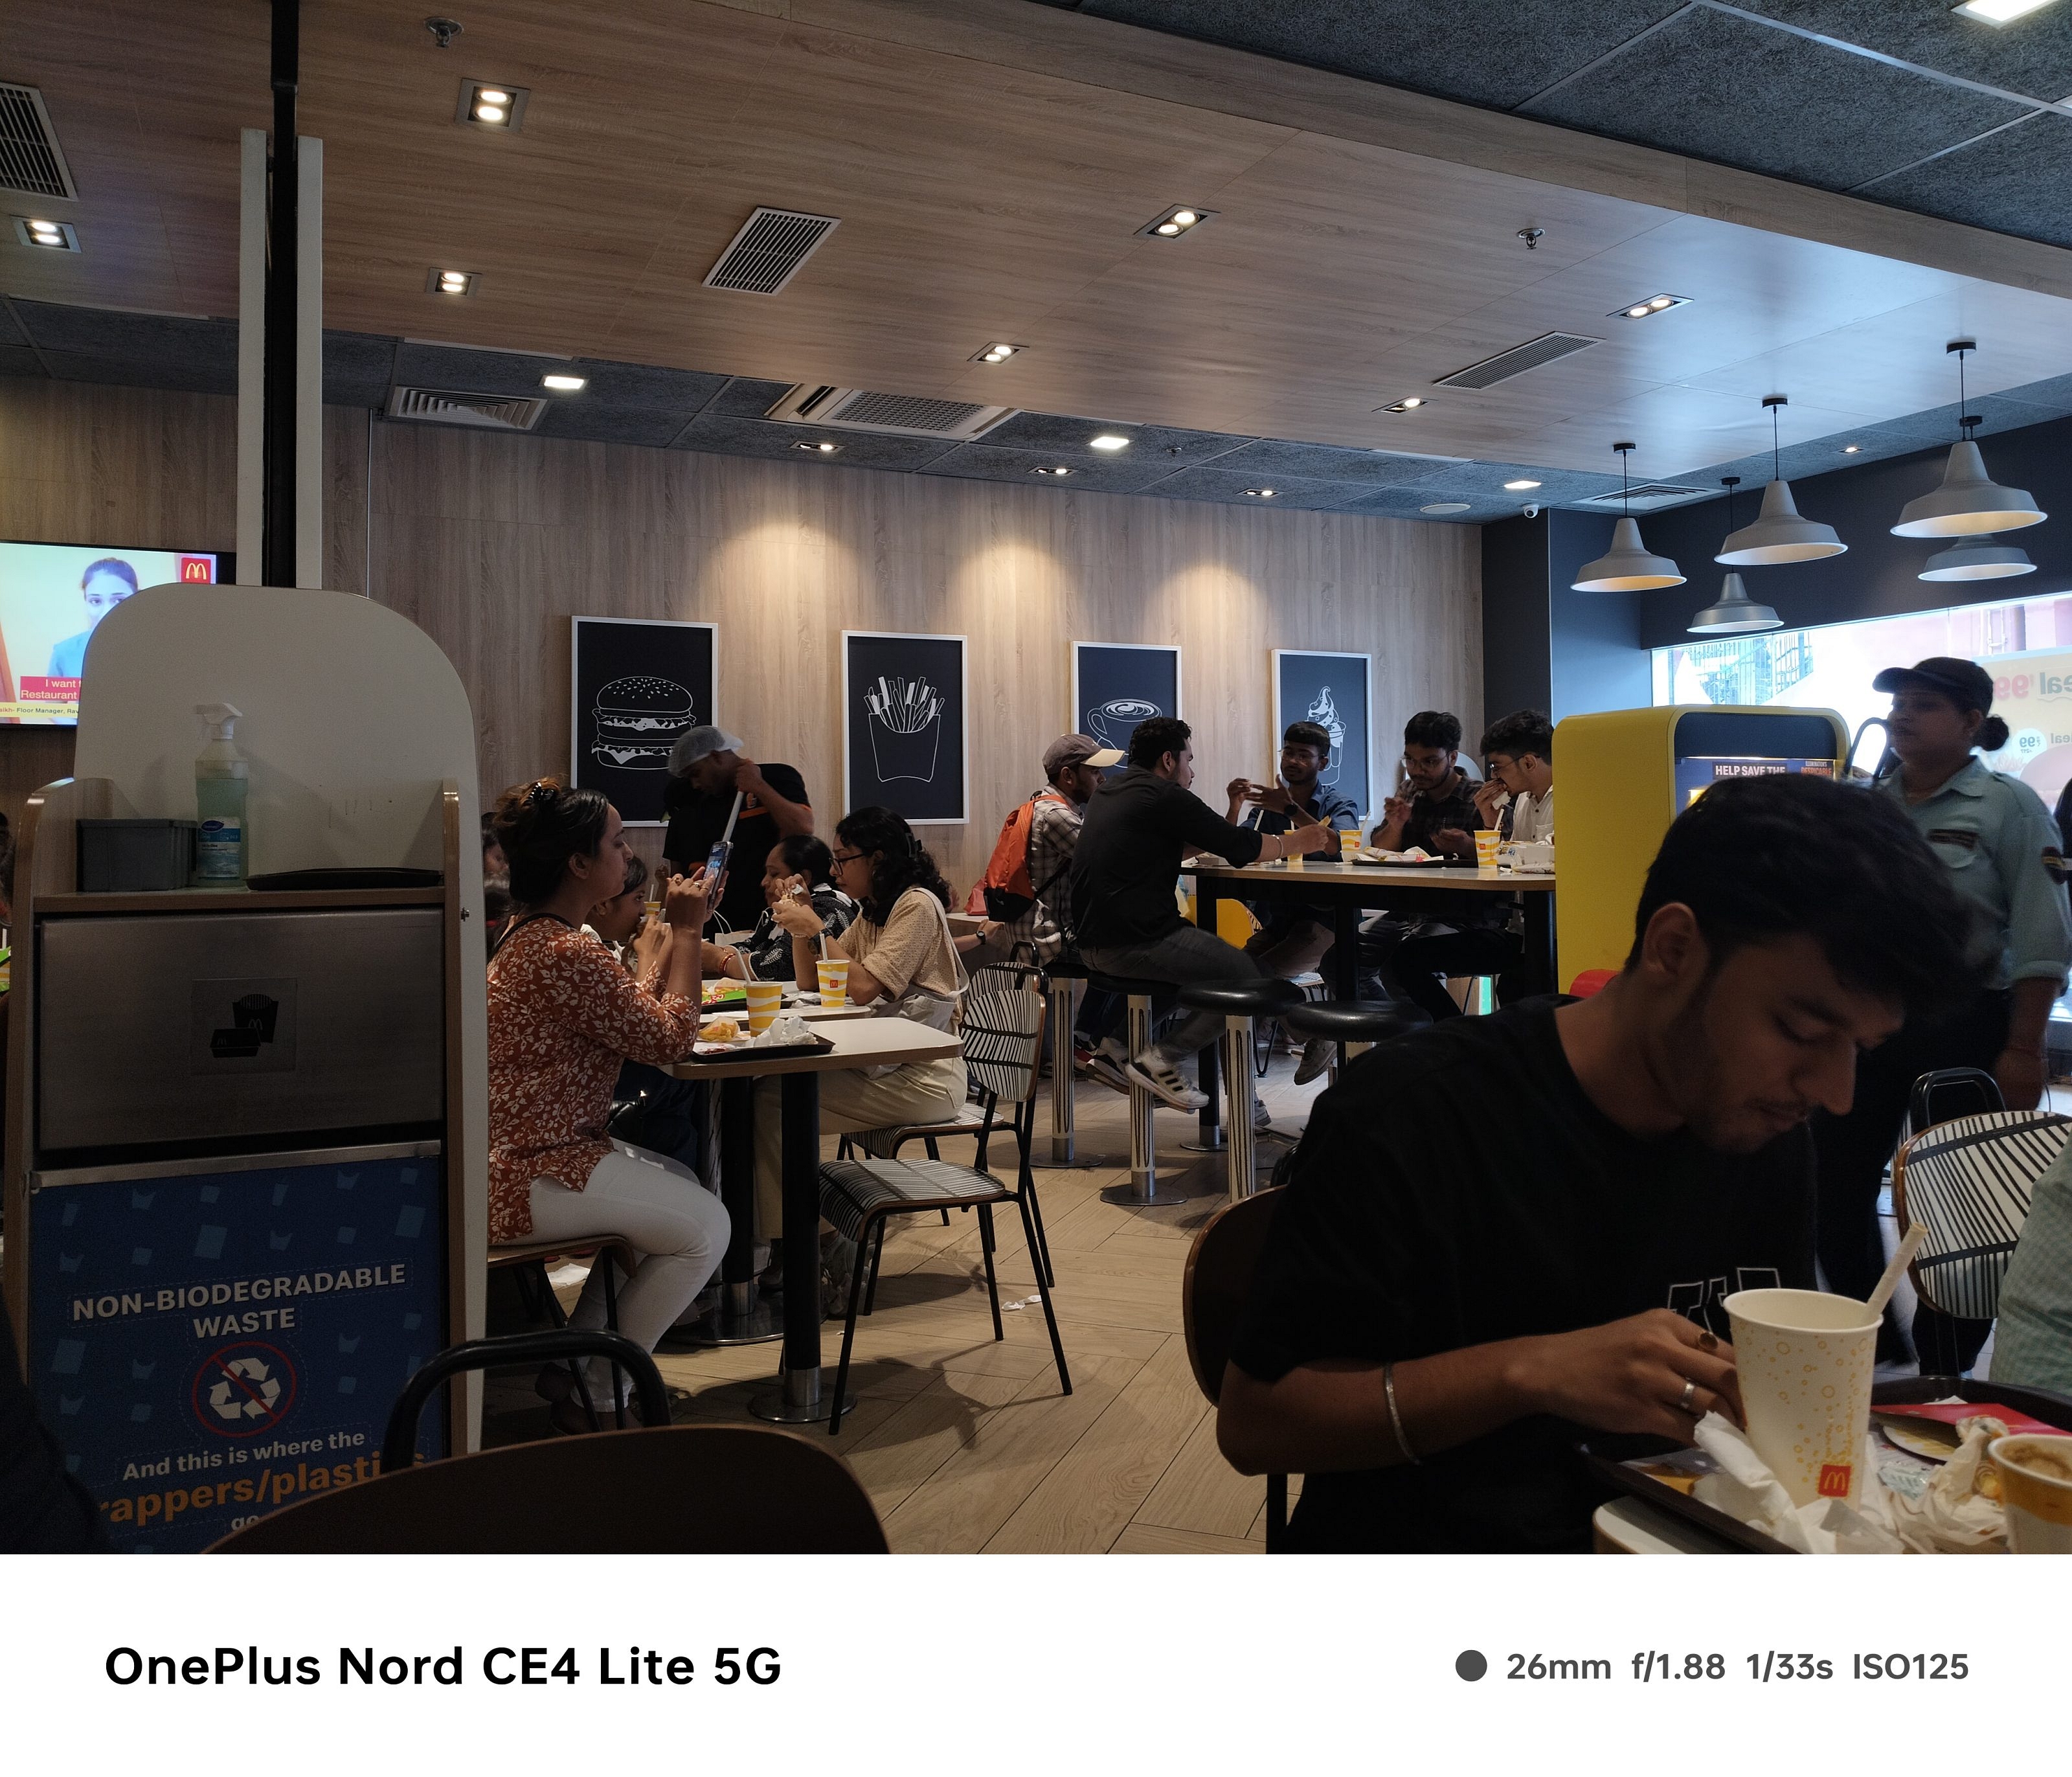 OnePlus Nord CE4 Lite 5G Camera Sample